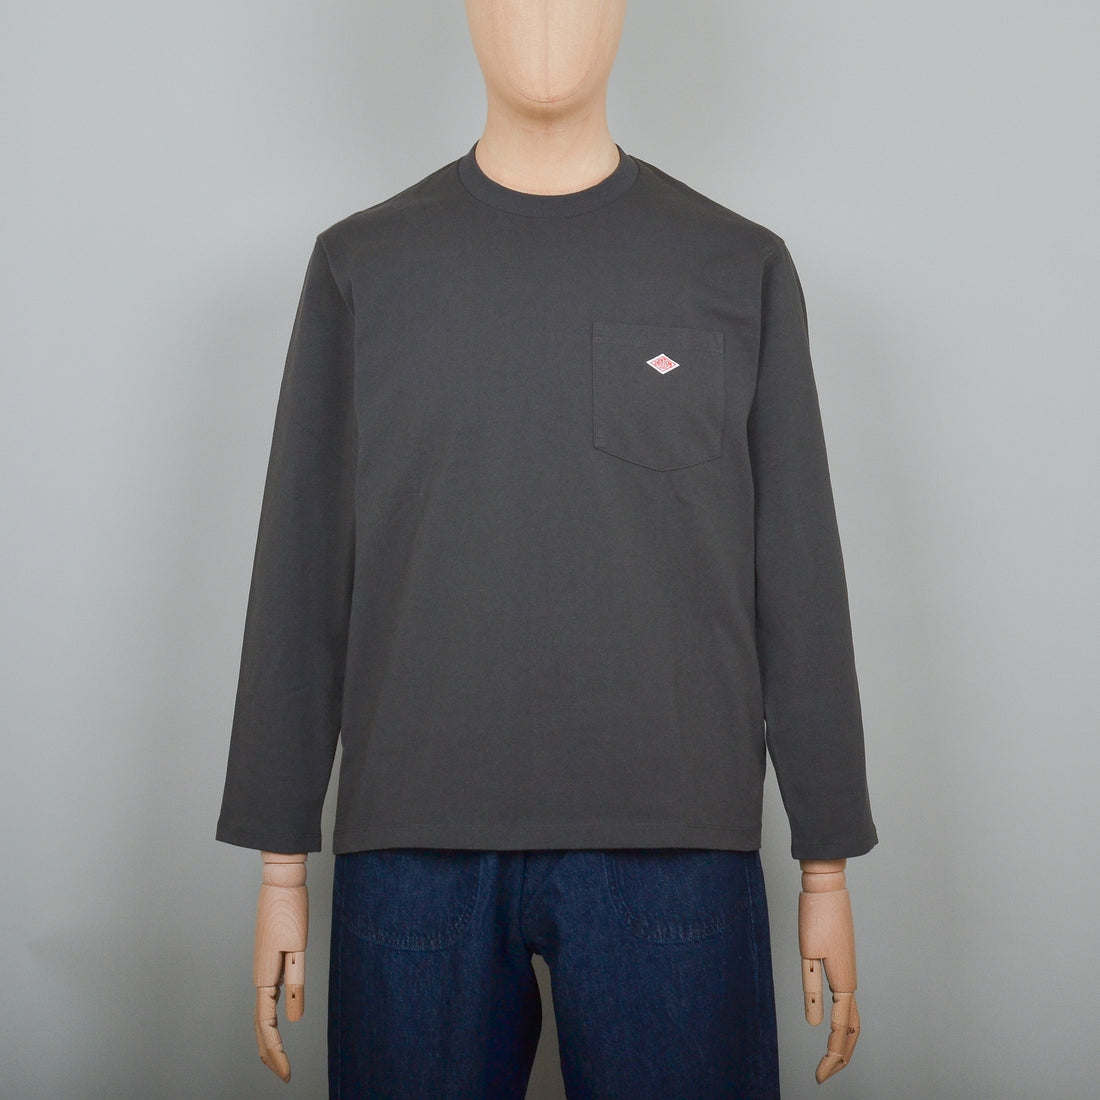 Danton Clothing | T Shirts & Jackets | Liquor Store – Mens